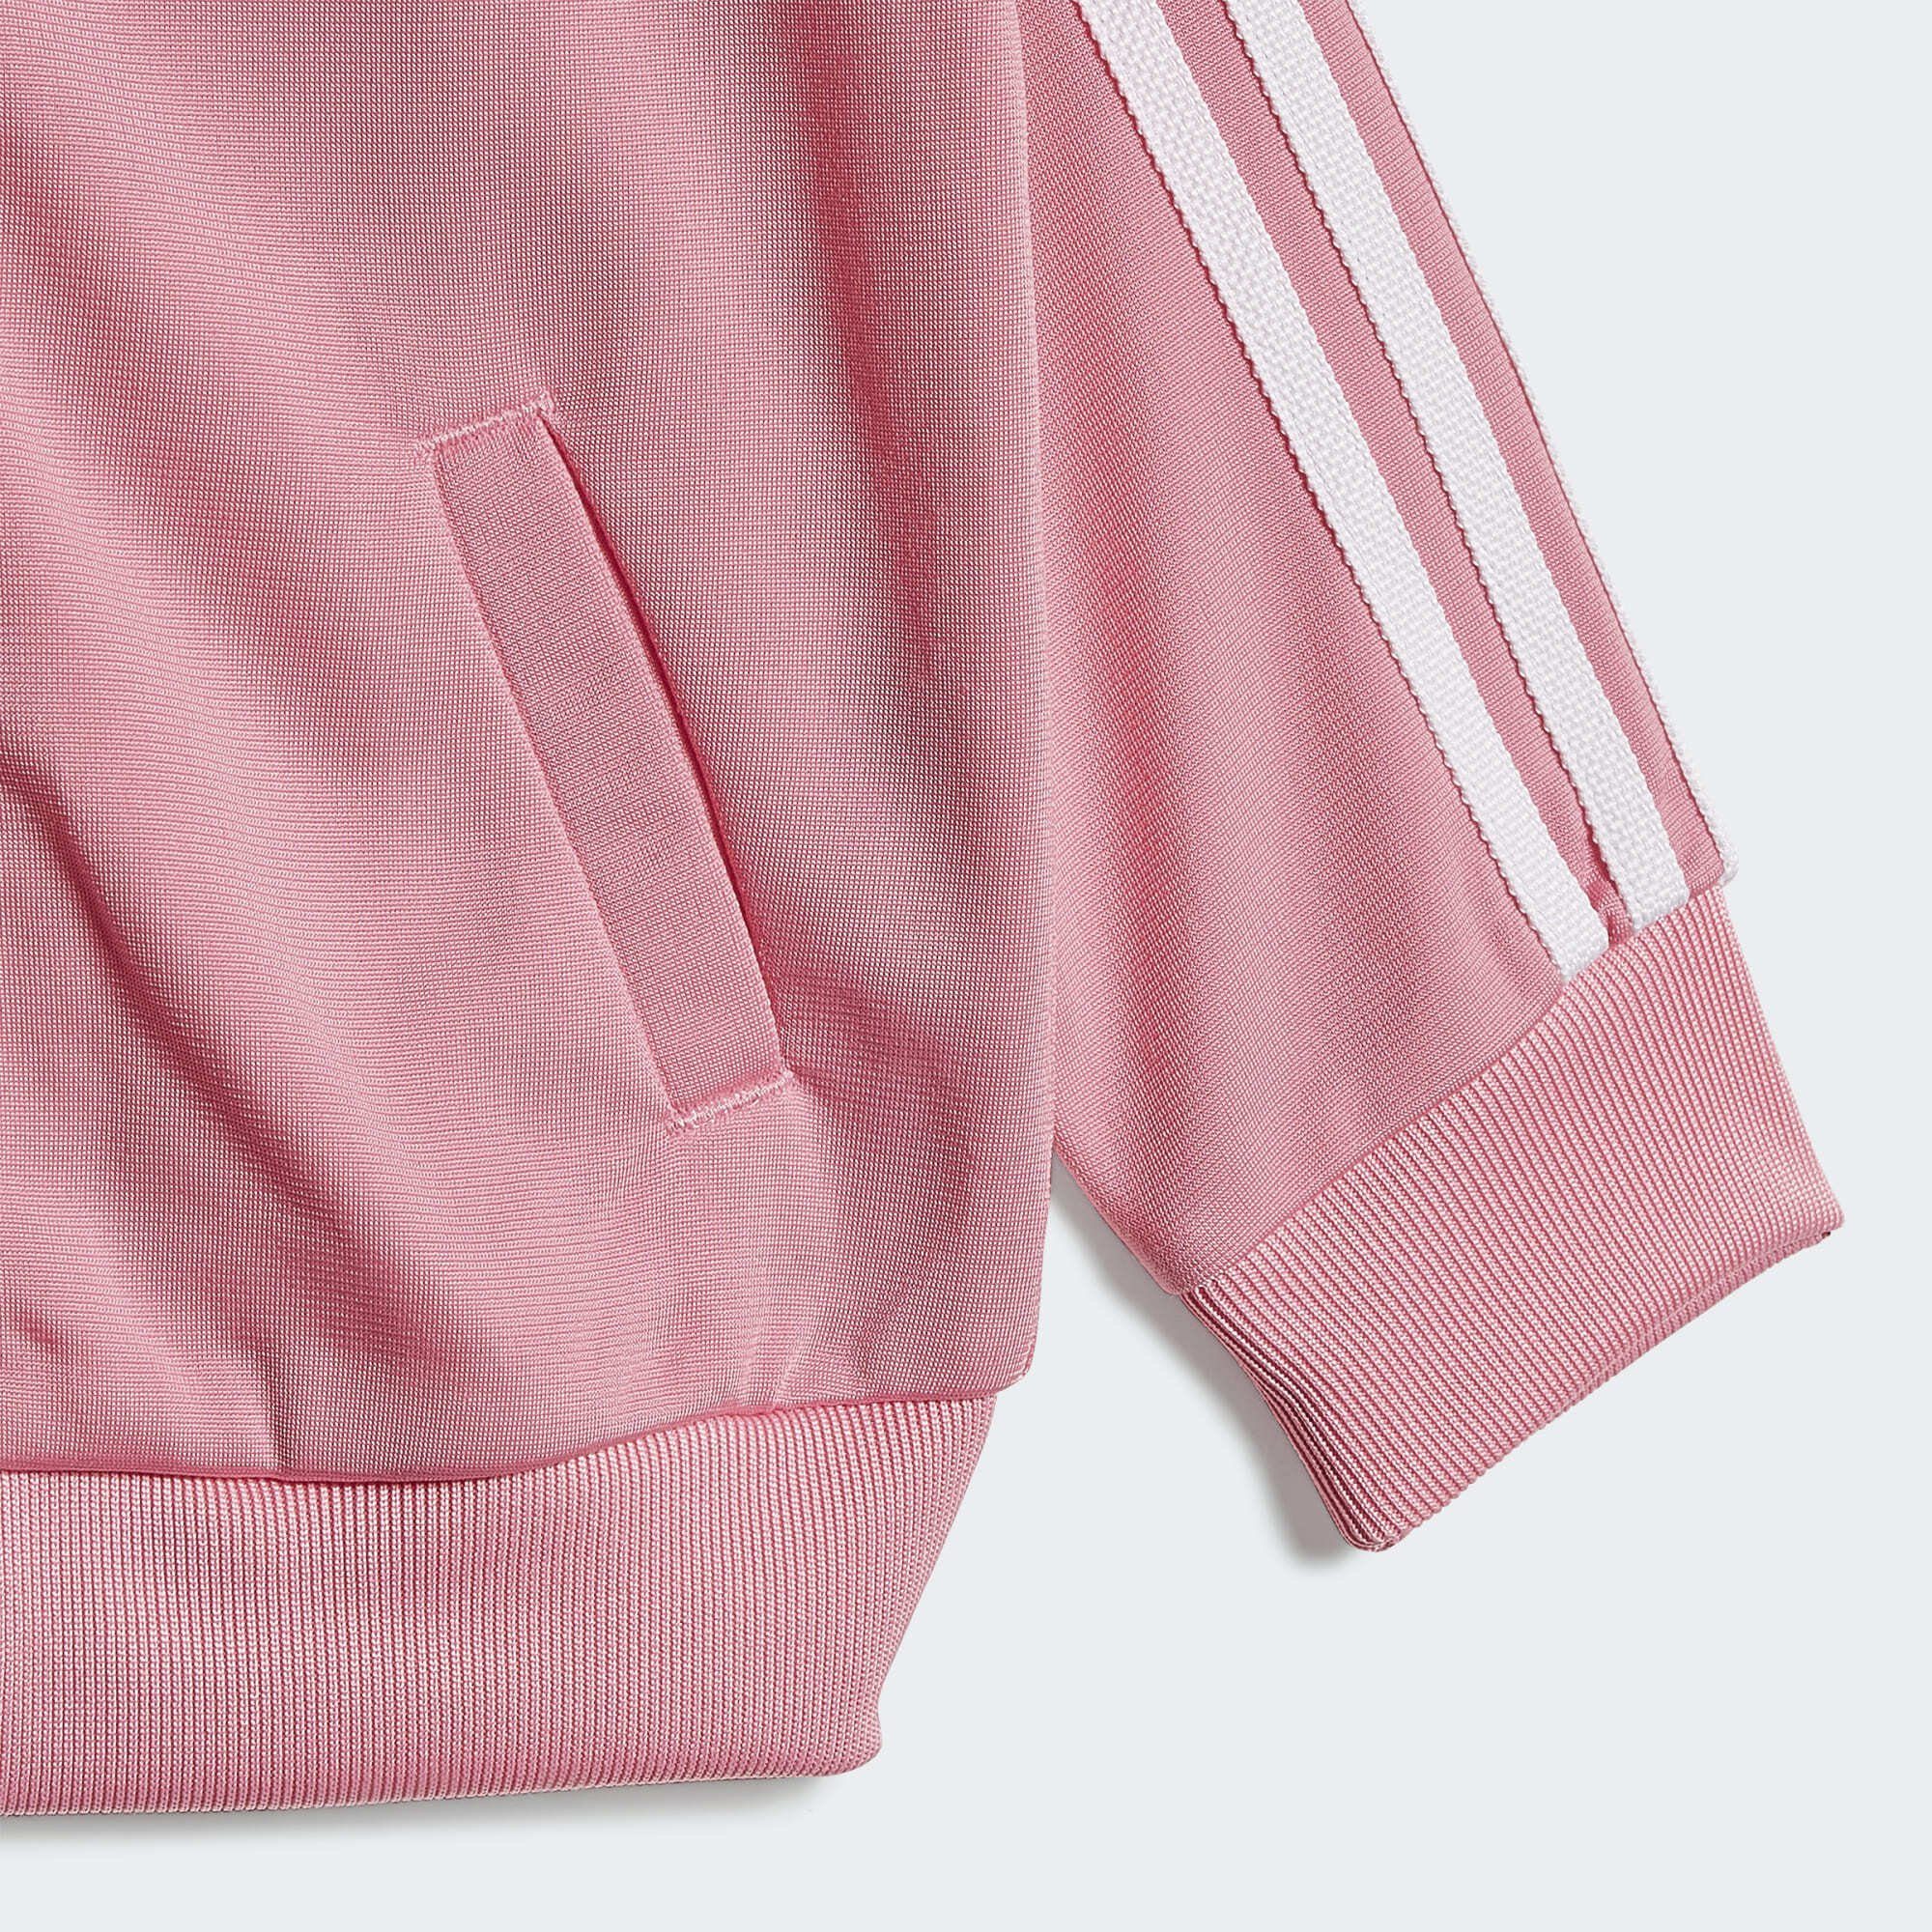 SST Originals Sportanzug TRAININGSANZUG Pink adidas ADICOLOR Bliss